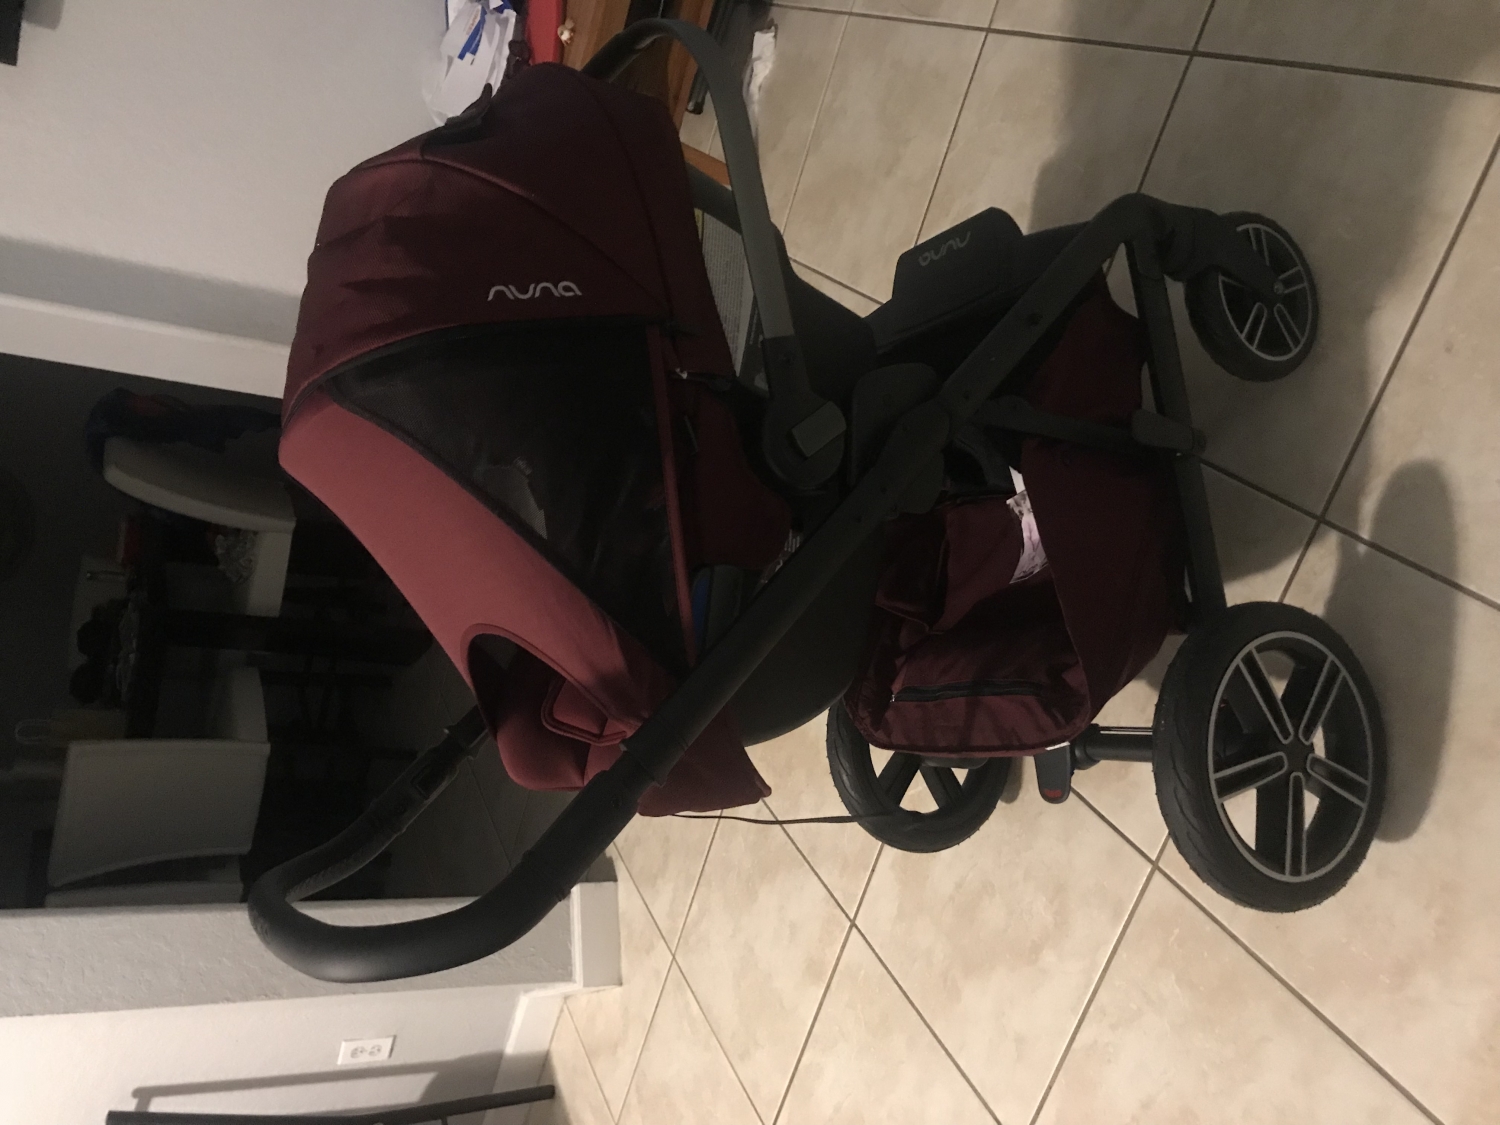 nuna stroller used